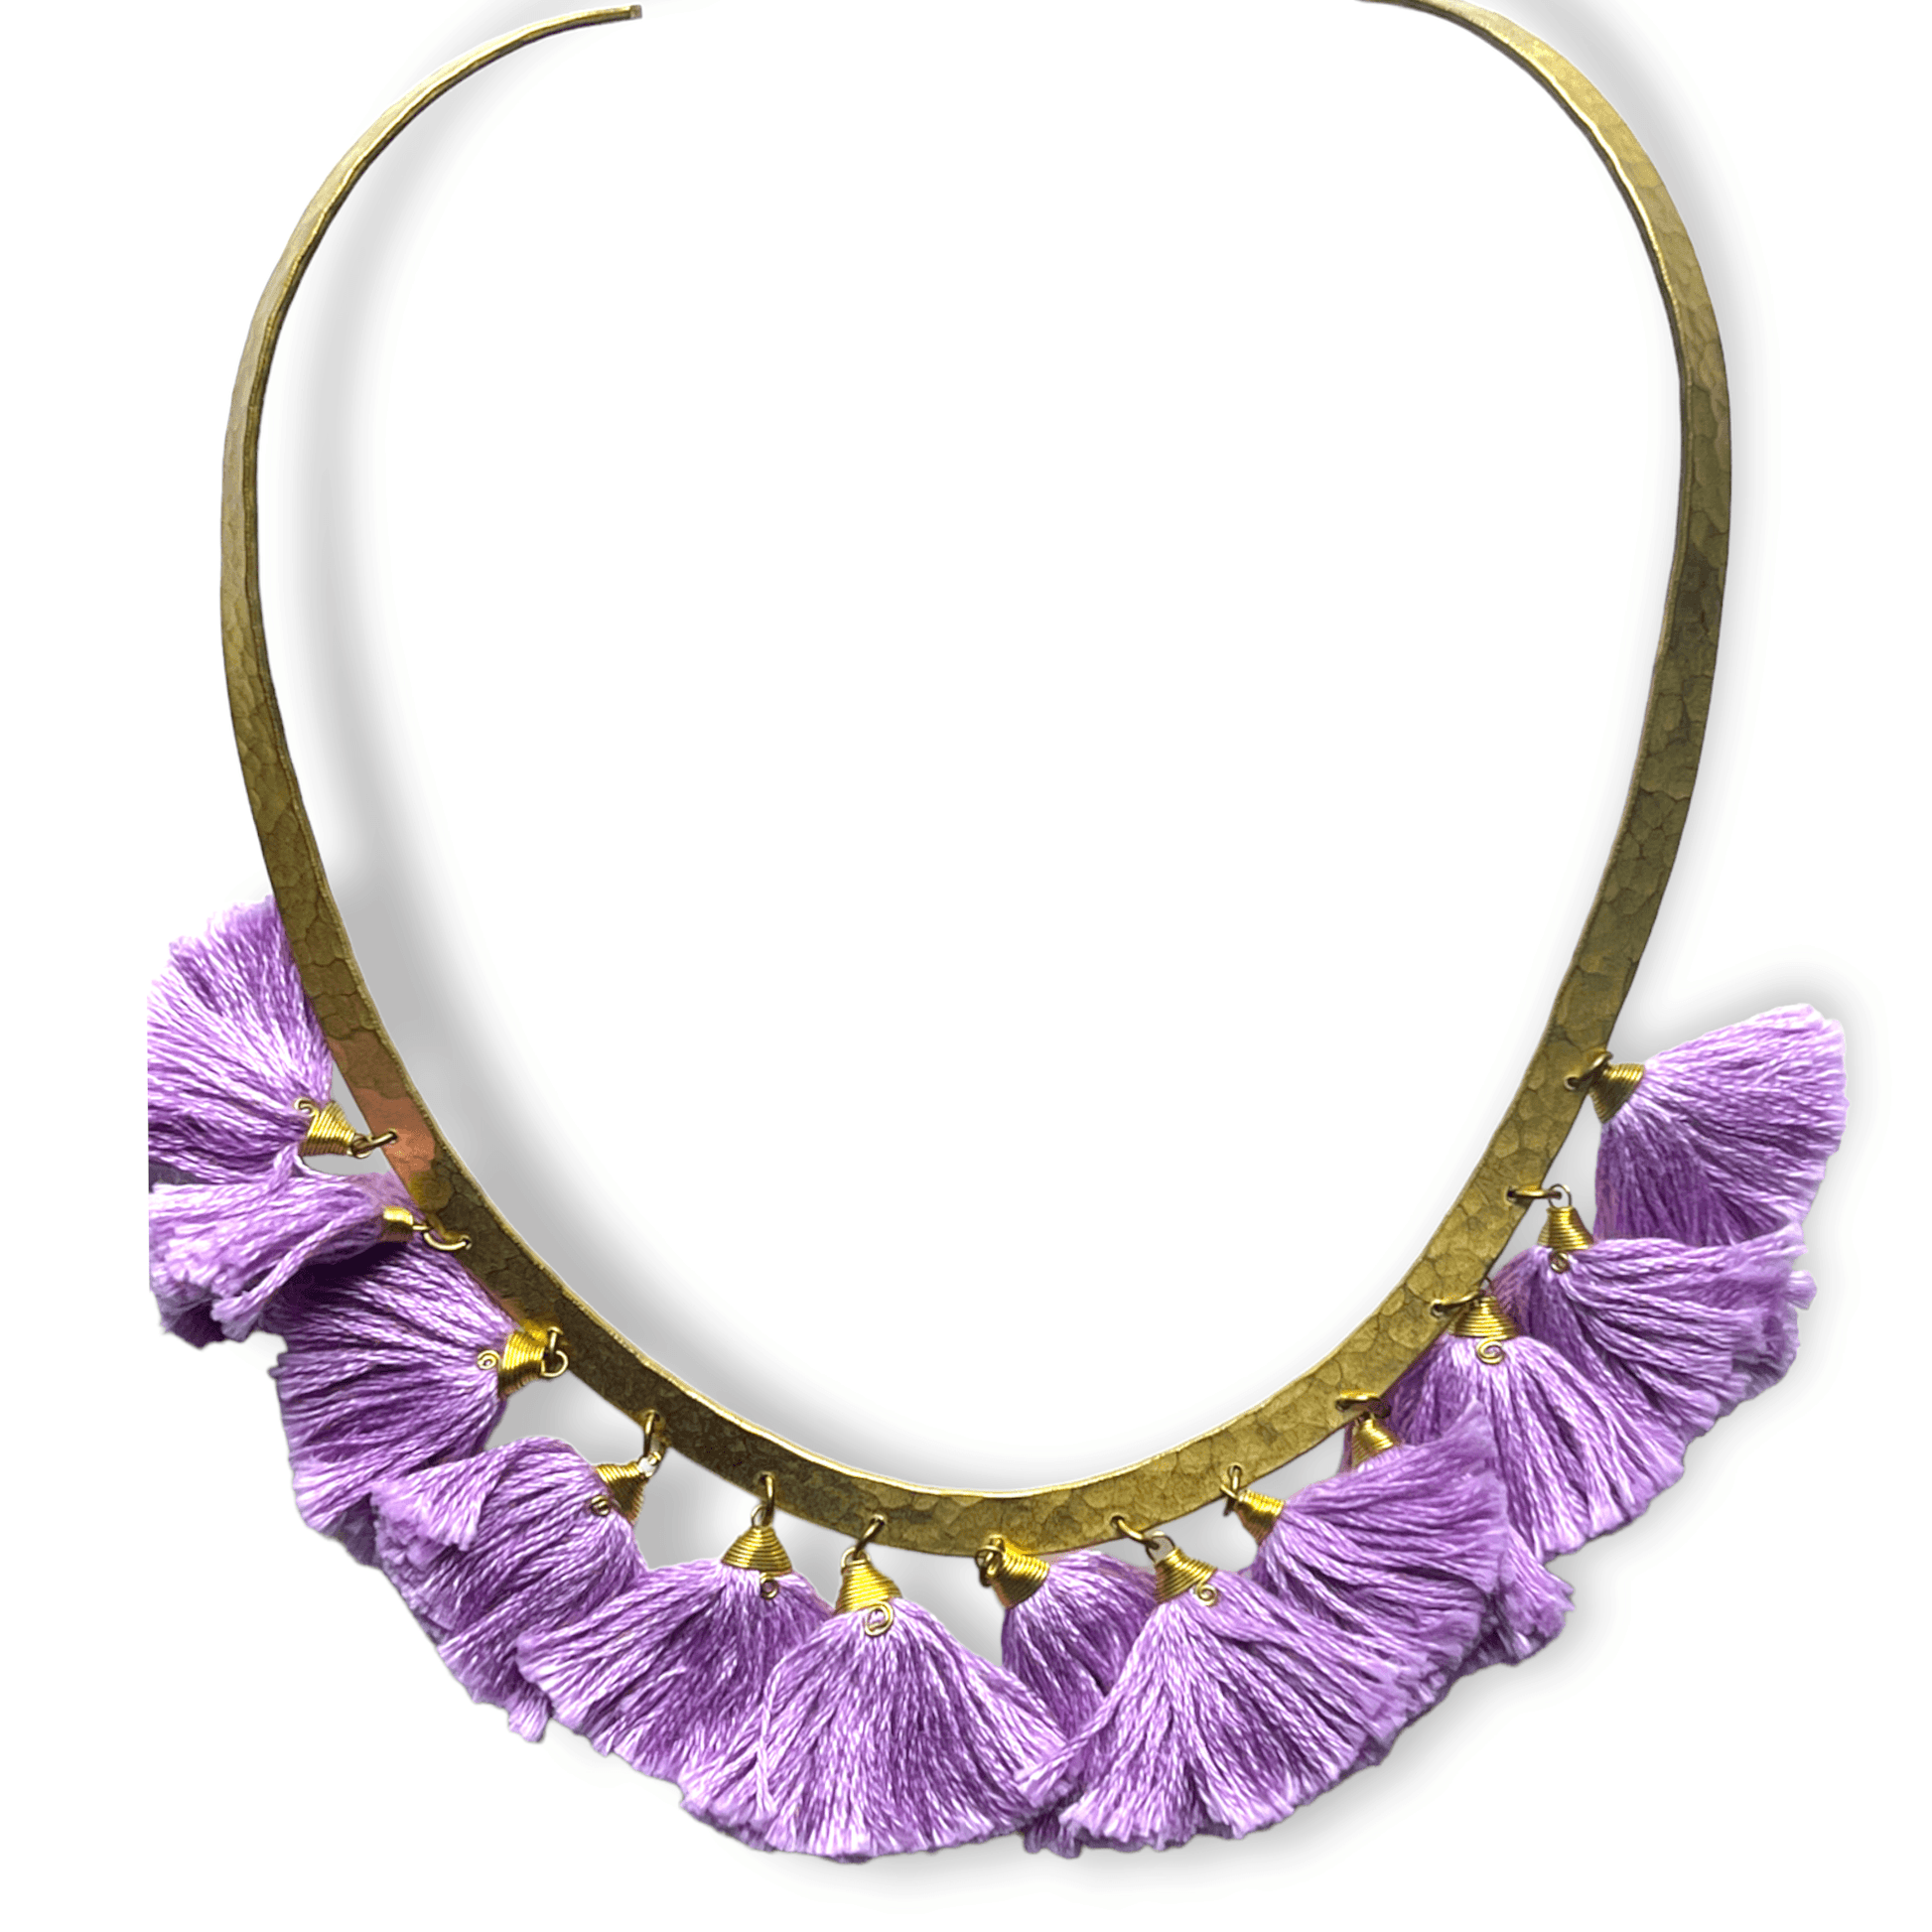 Choker necklace brass collar with colored tasselsSundara Joon